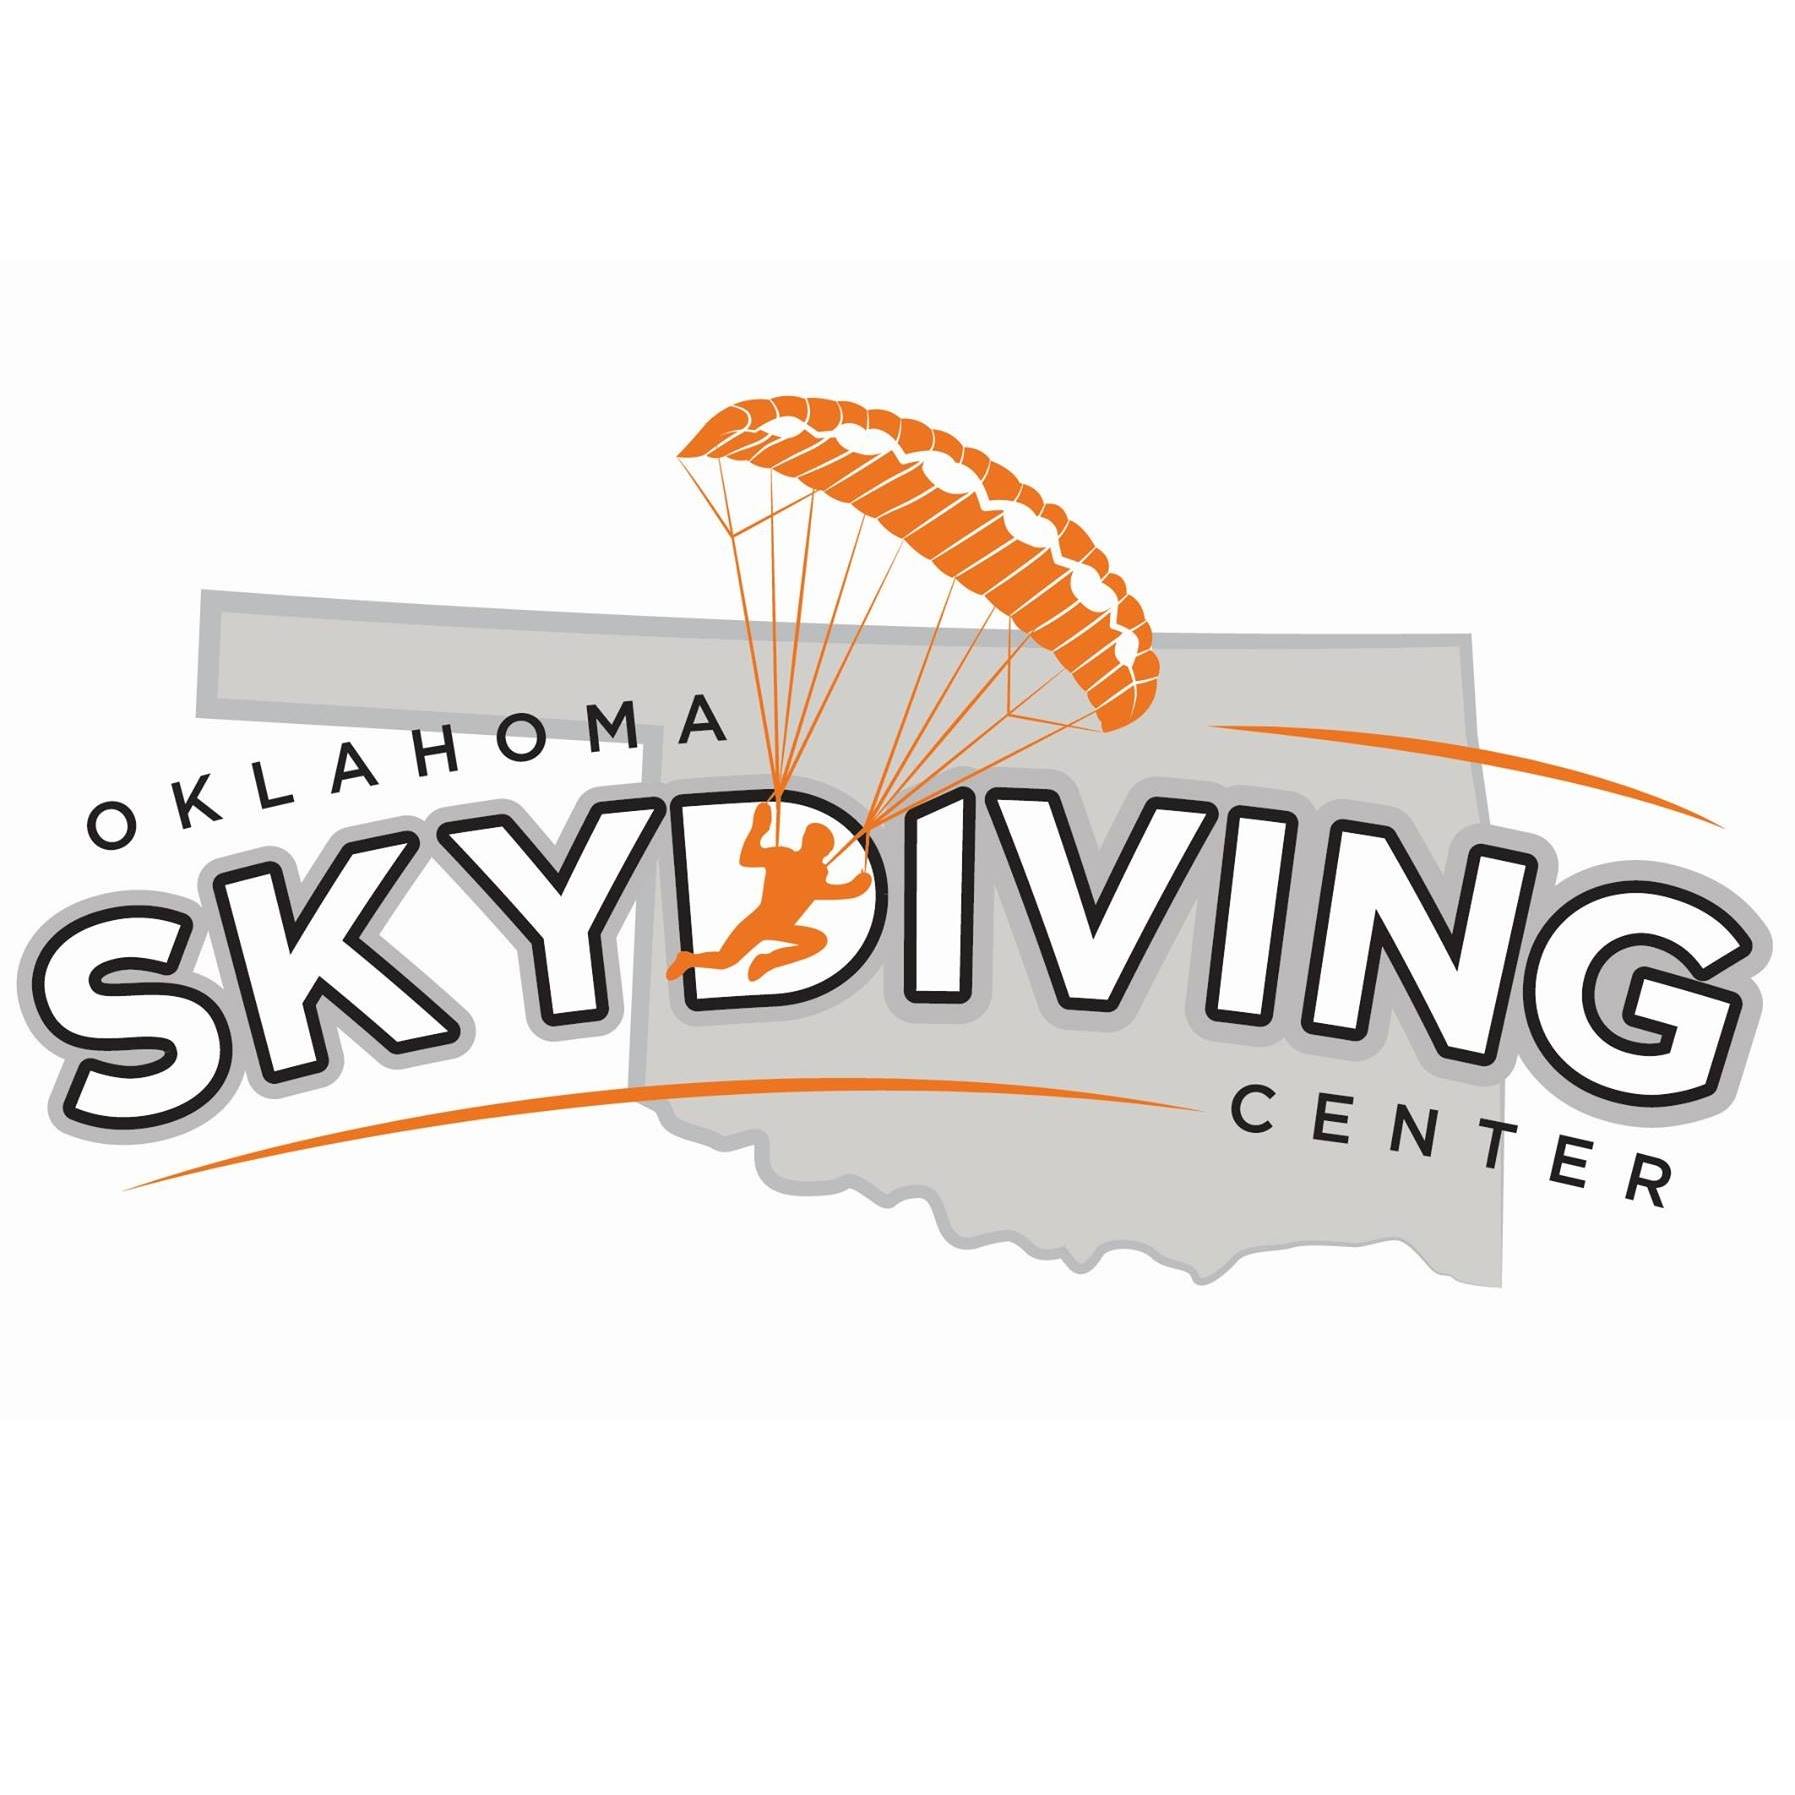 Oklahoma Skydiving Centre logo